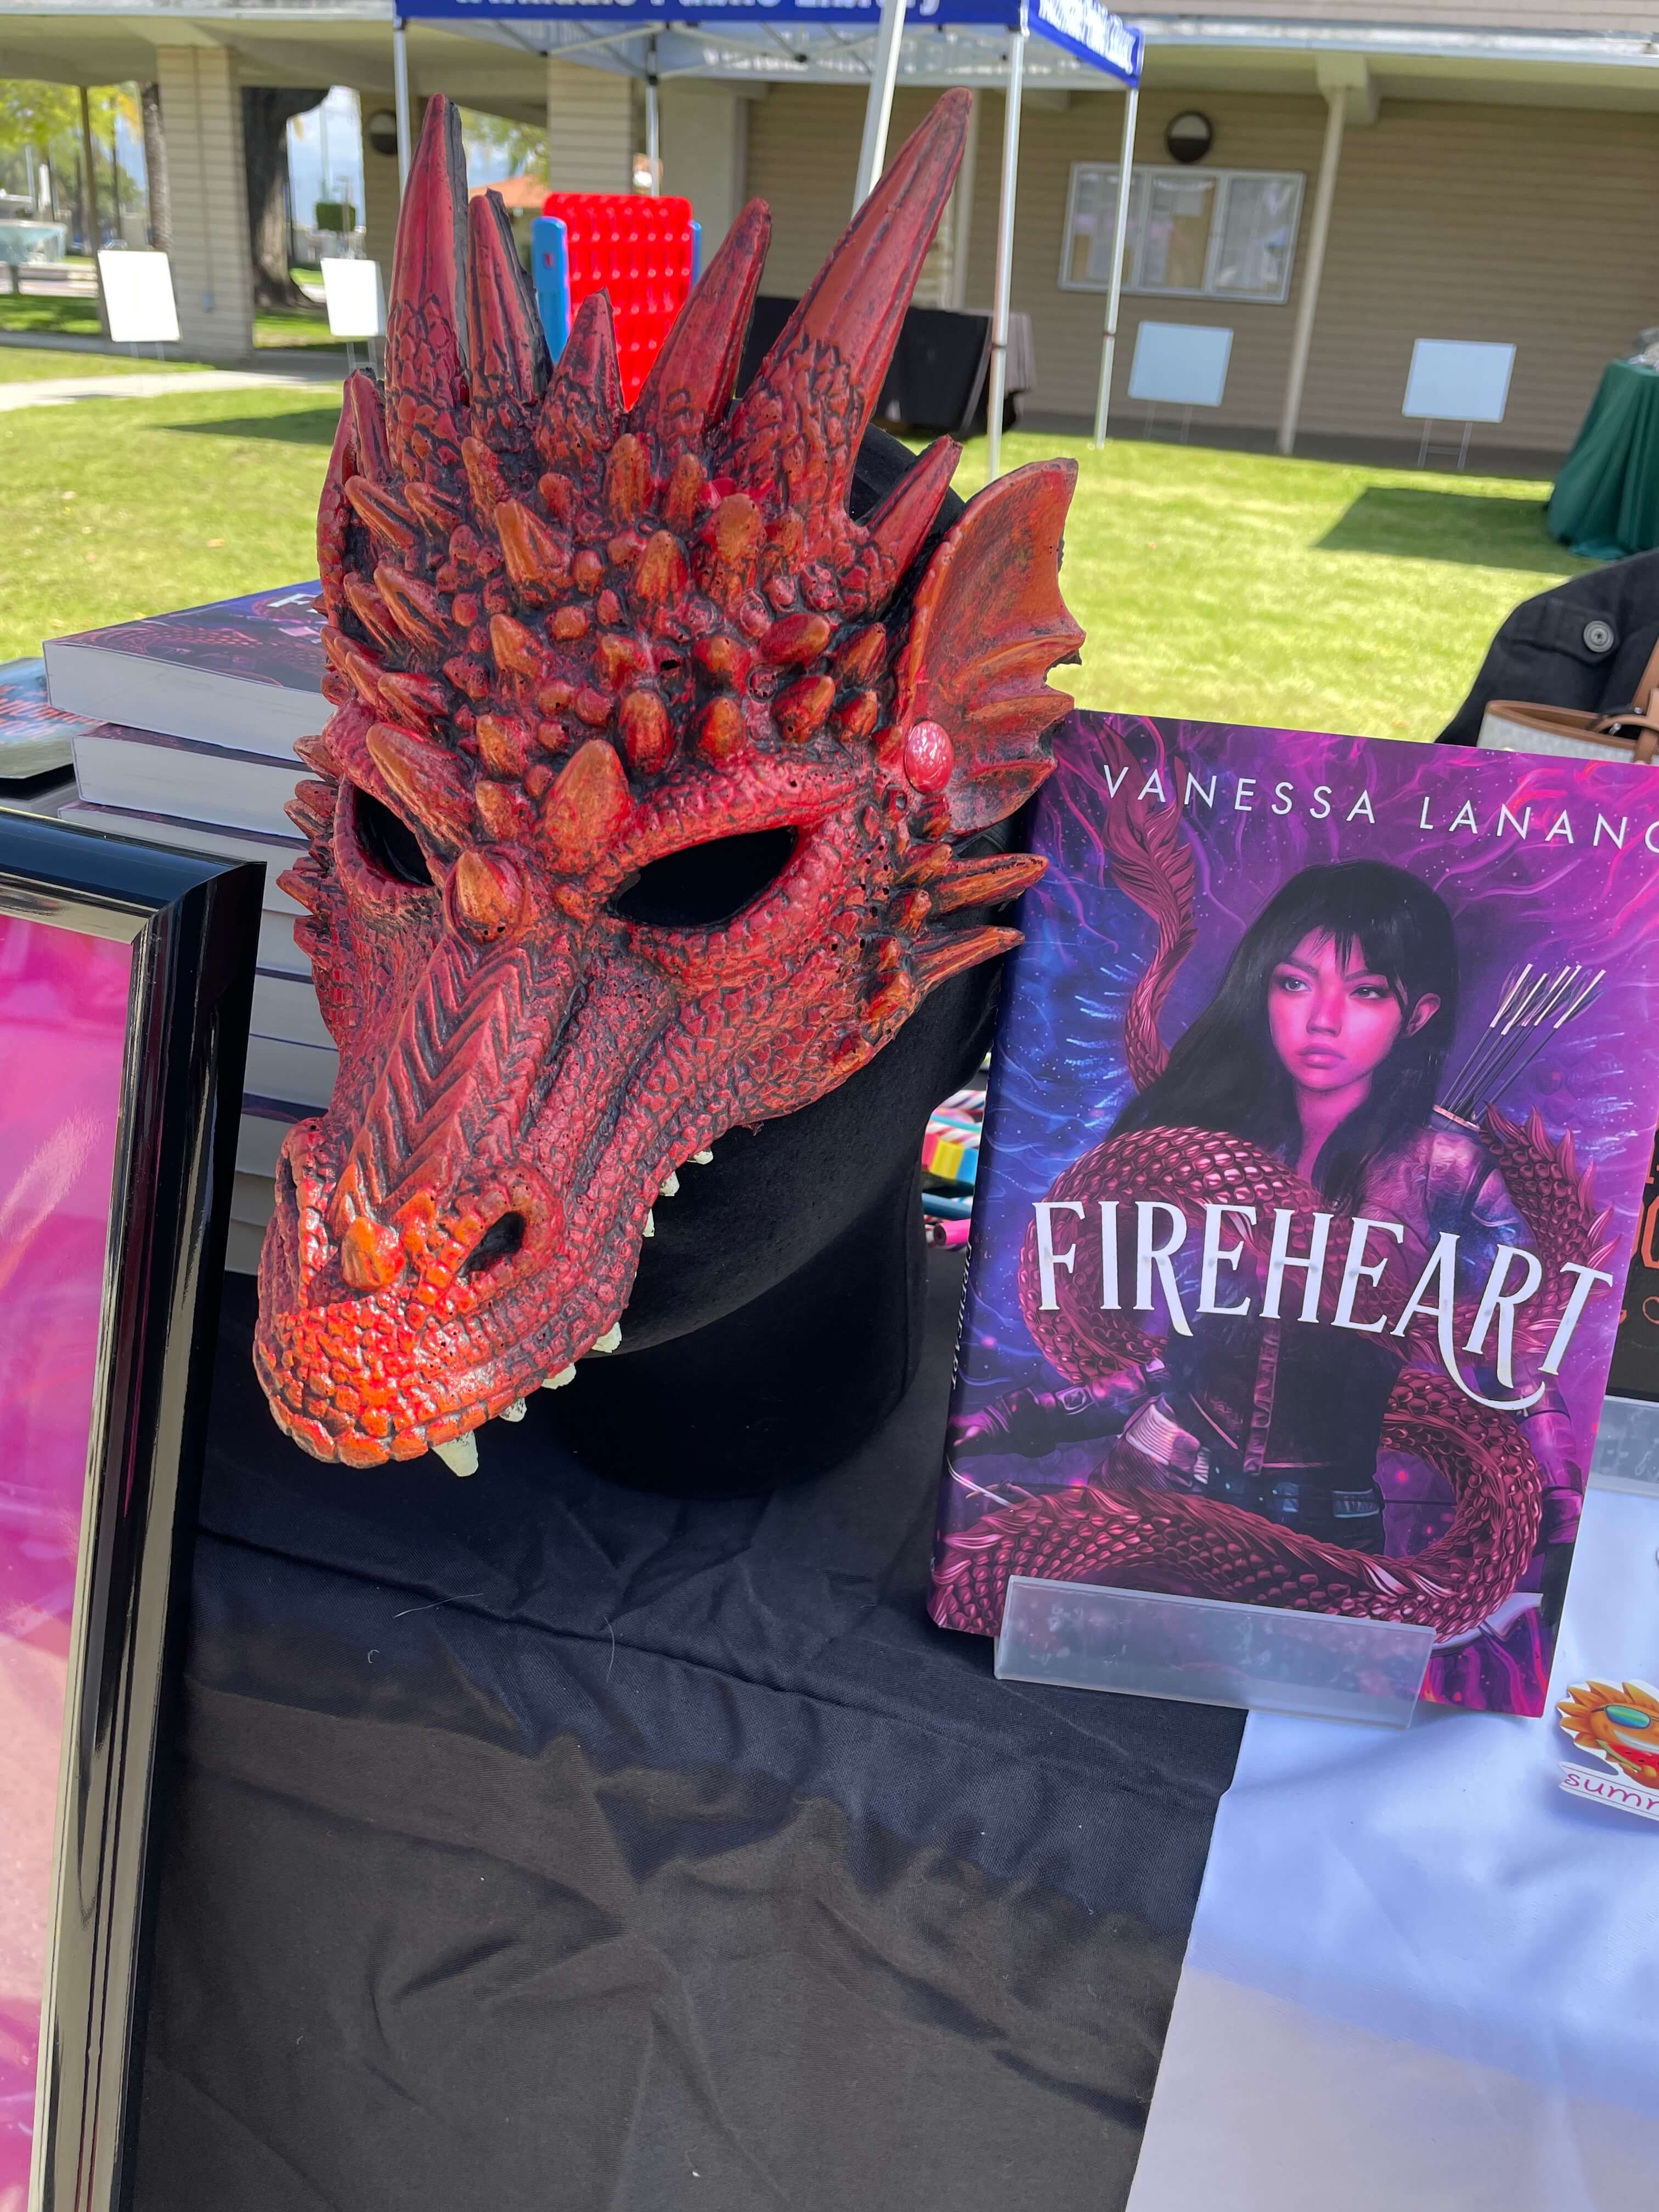 Fireheart book display